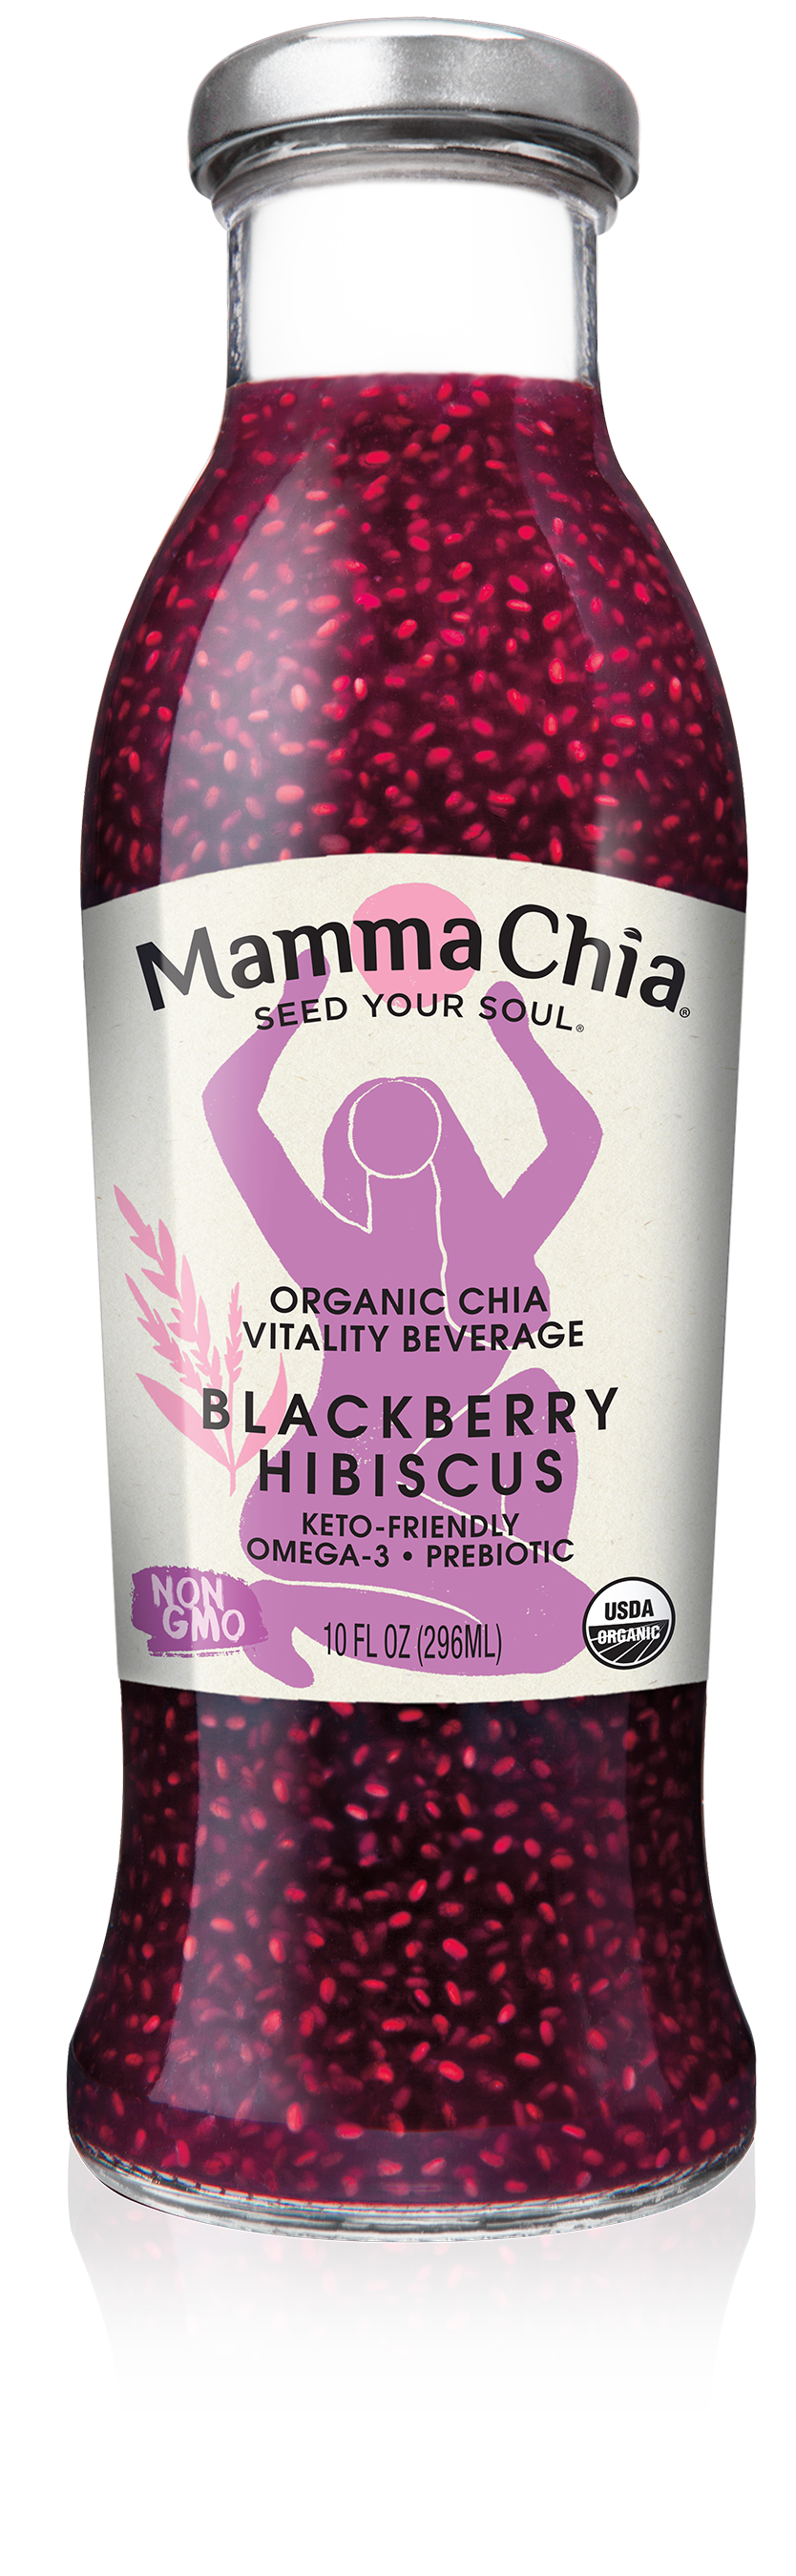 Mamma Chia Blackberry Hibiscus Organic Chia Beverage 12 units per case 10.0 fl